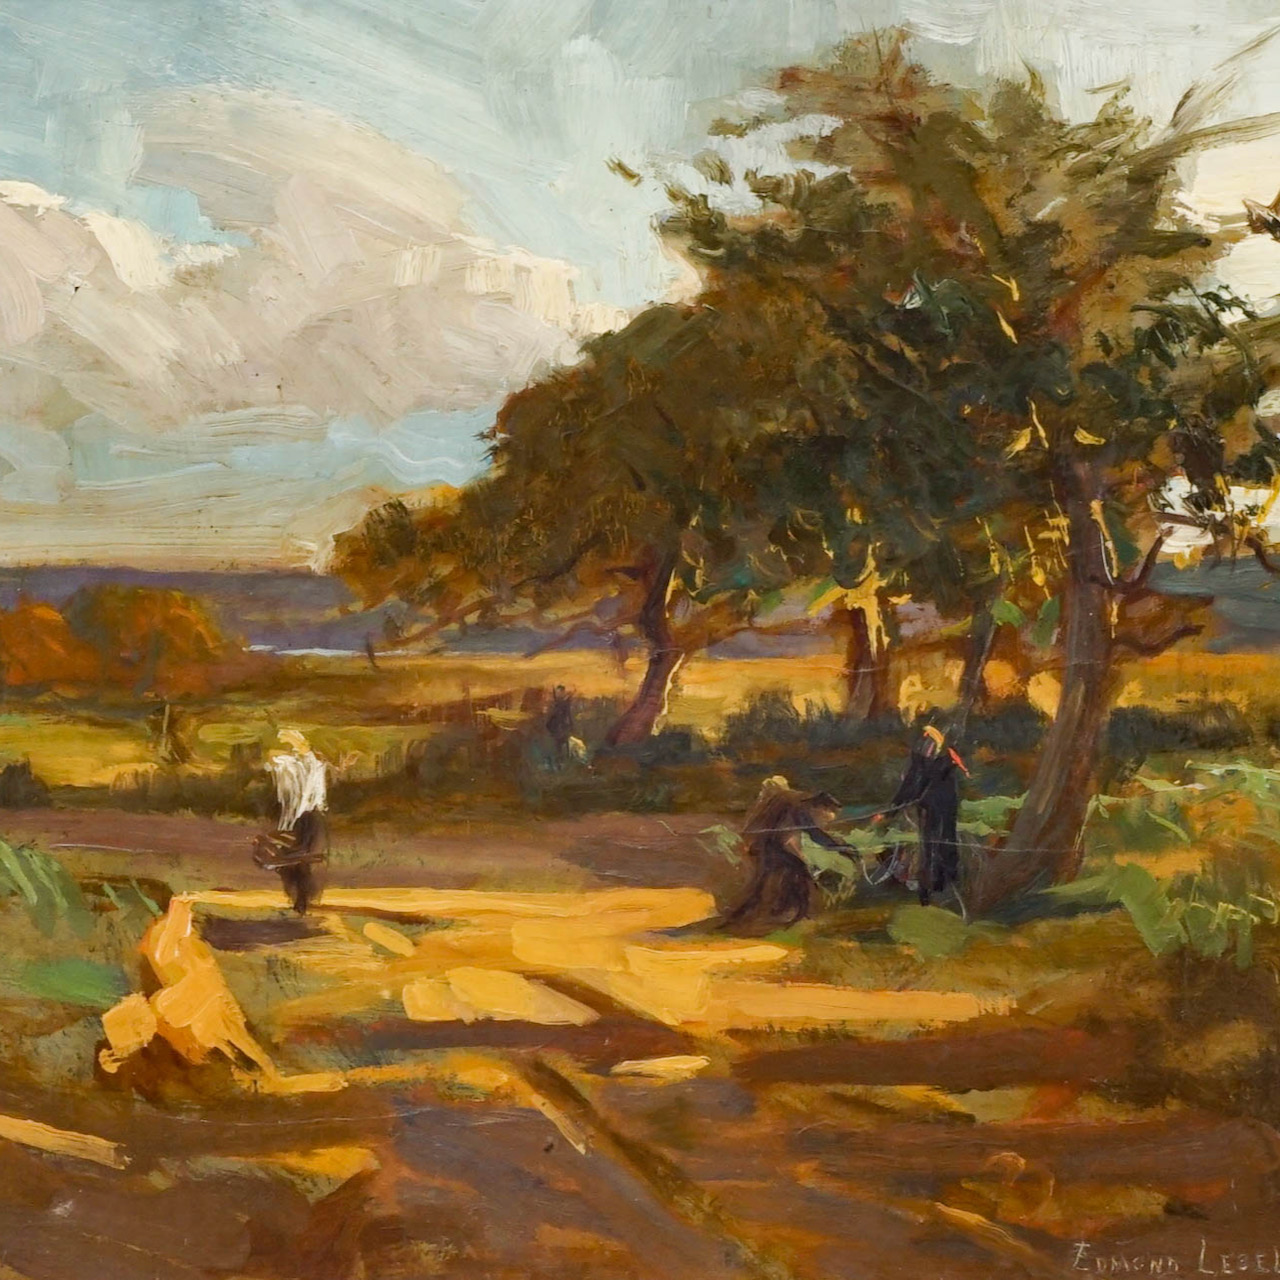 A Rural Scene by Edmond Lesellier